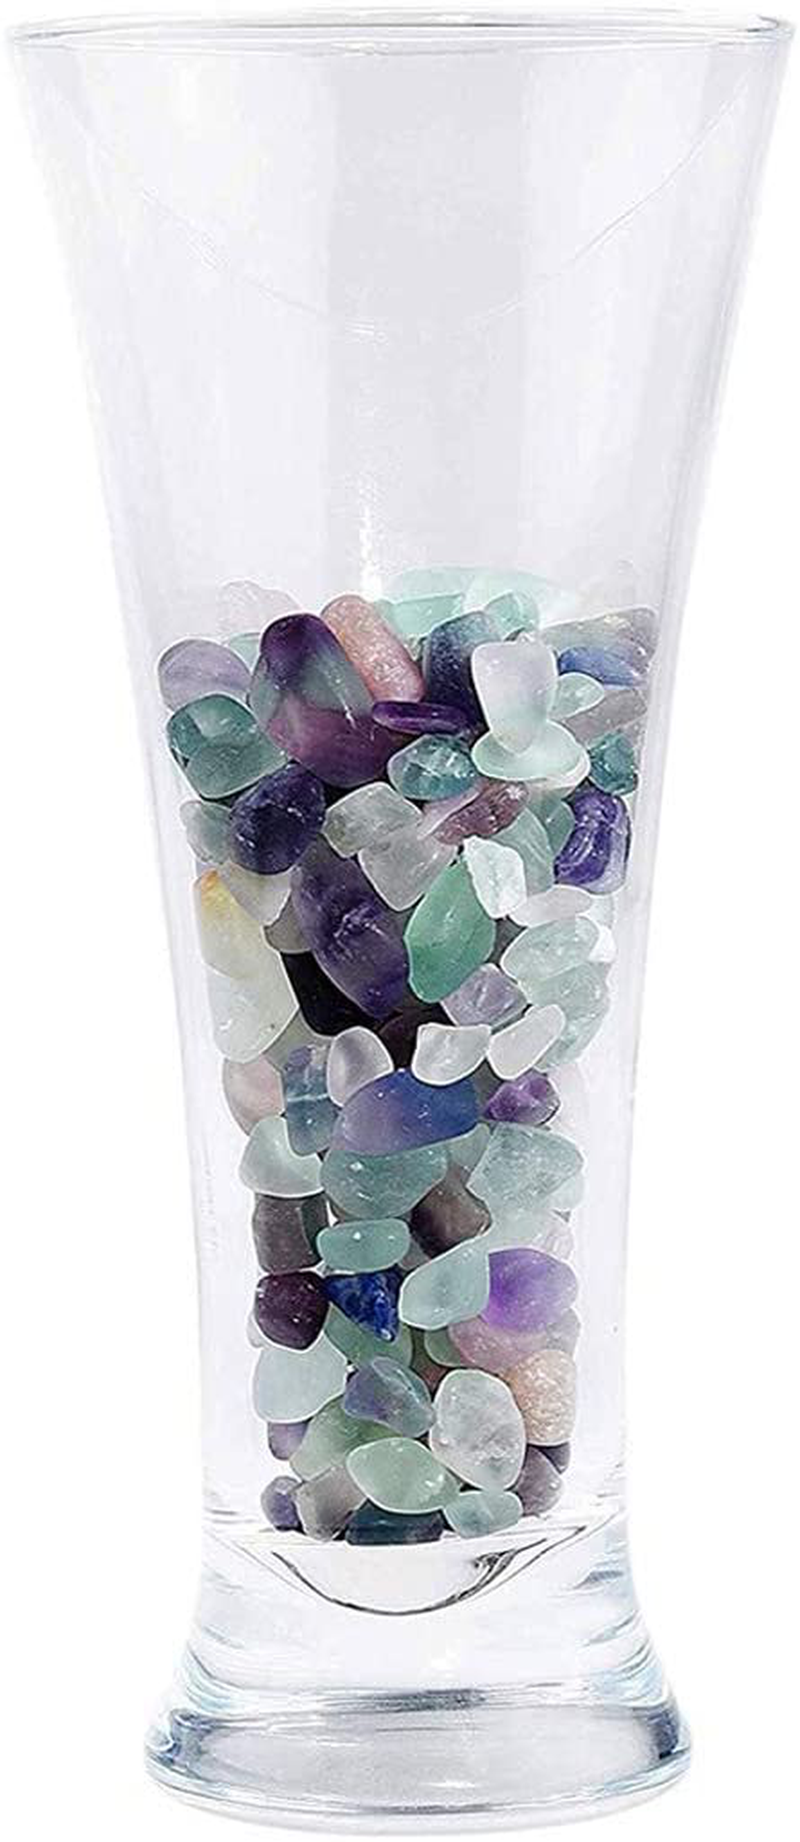 WAYBER Glass Stones, 1LB/460g Irregular Sea Glass Pebbles Non-Toxic Artificial Crystal Gemstones for Aquarium Turtle Tank Vase Filler Terrarium